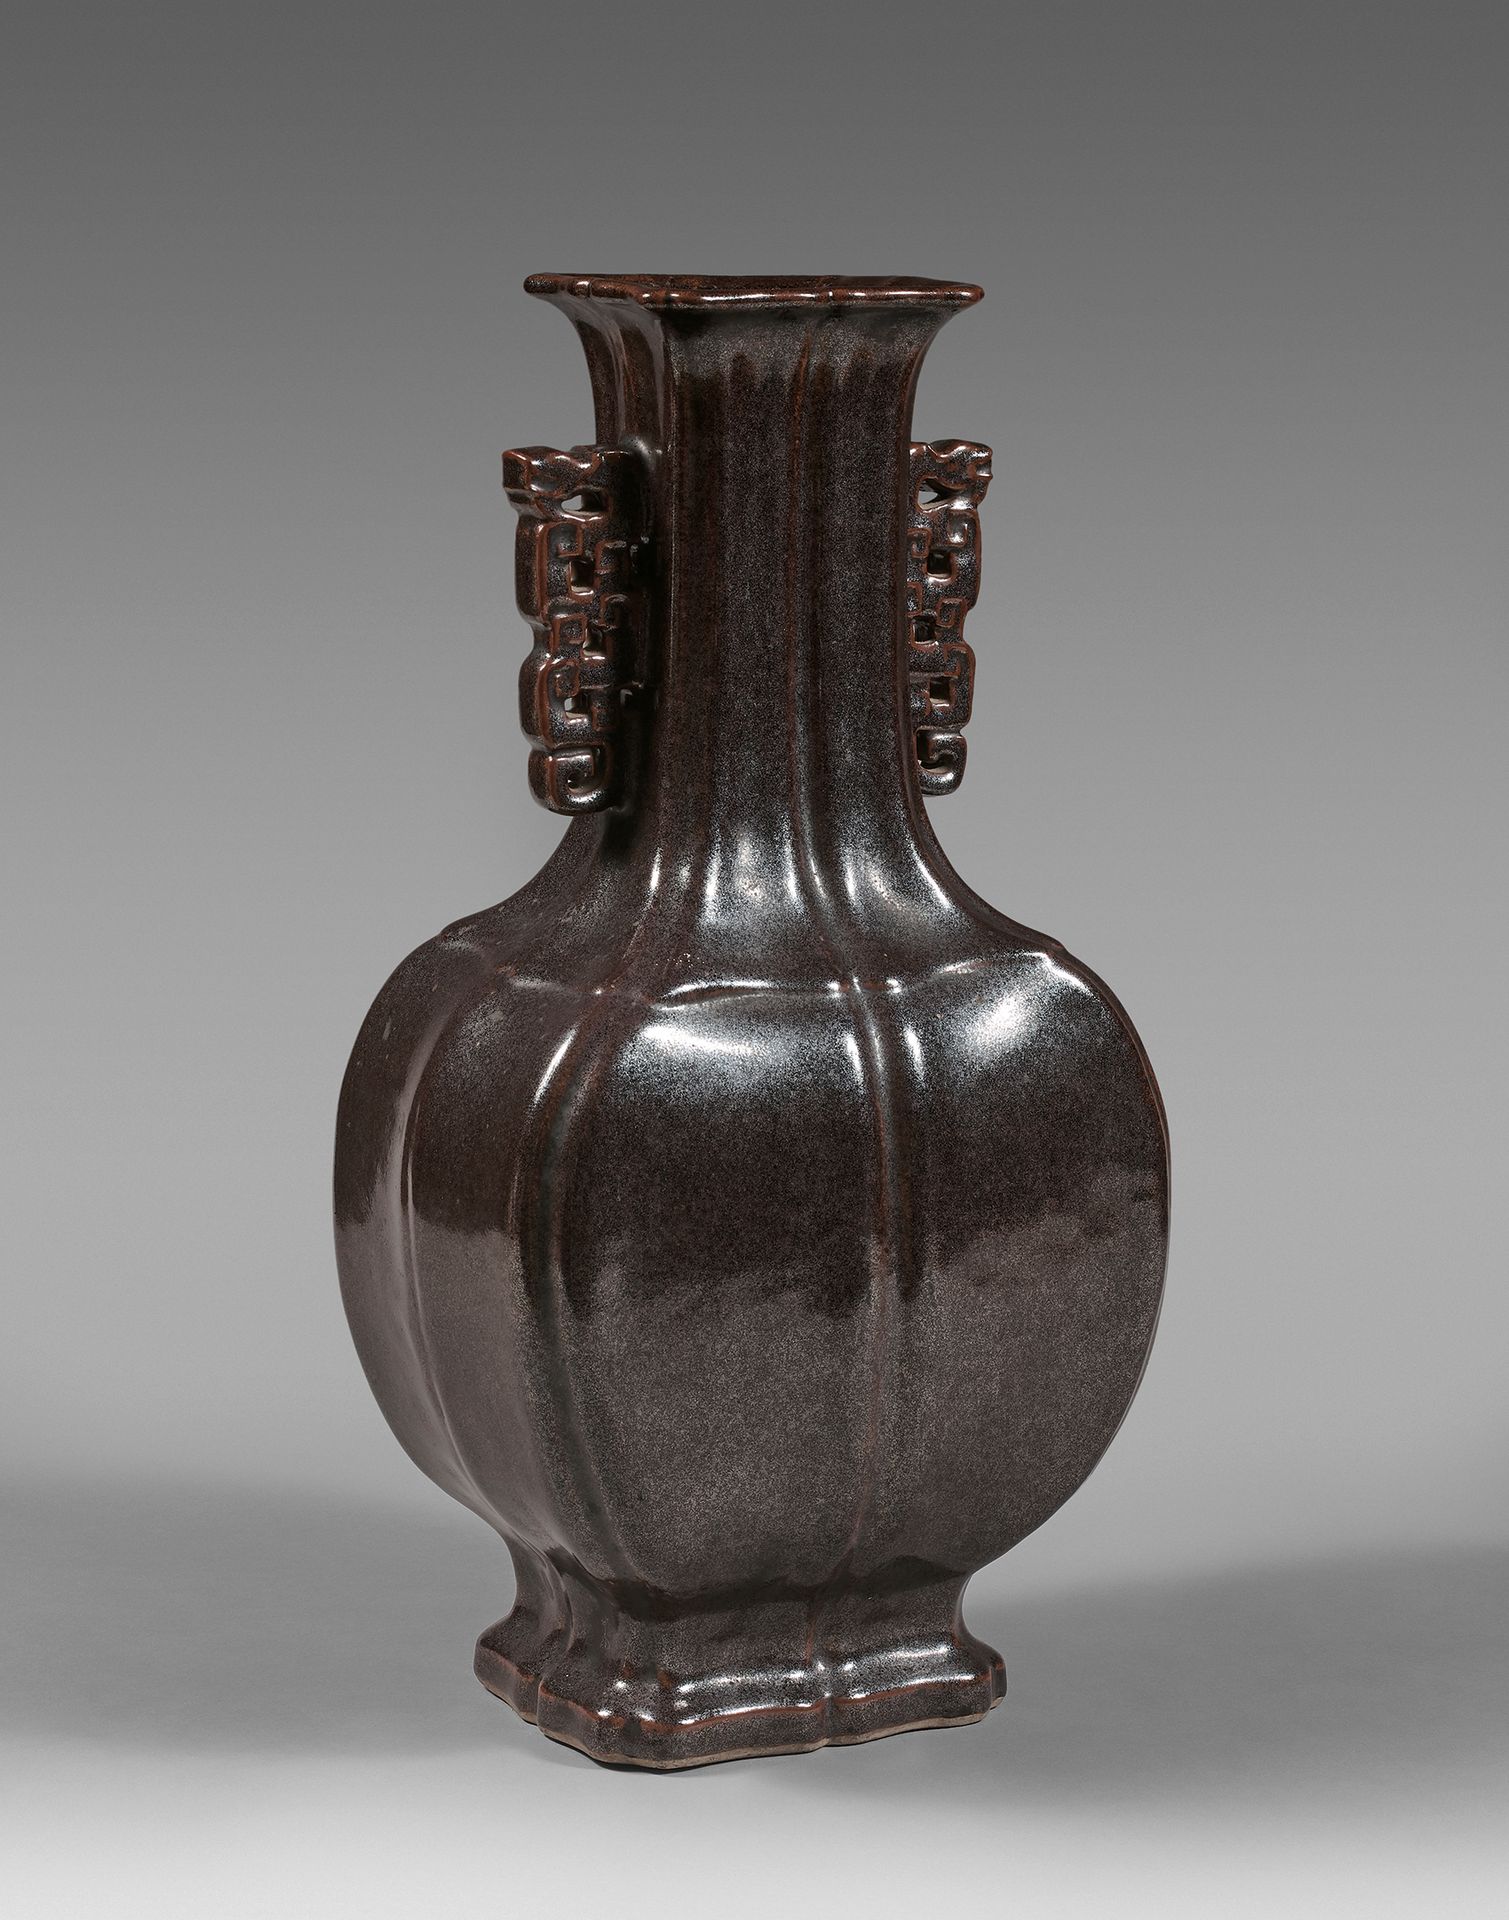 CHINE - XIXe siècle 
高度：44.5厘米 棕色珐琅彩大花瓶，有棱角，喇叭形颈部，镂空把手，描绘着古龙和卷轴。